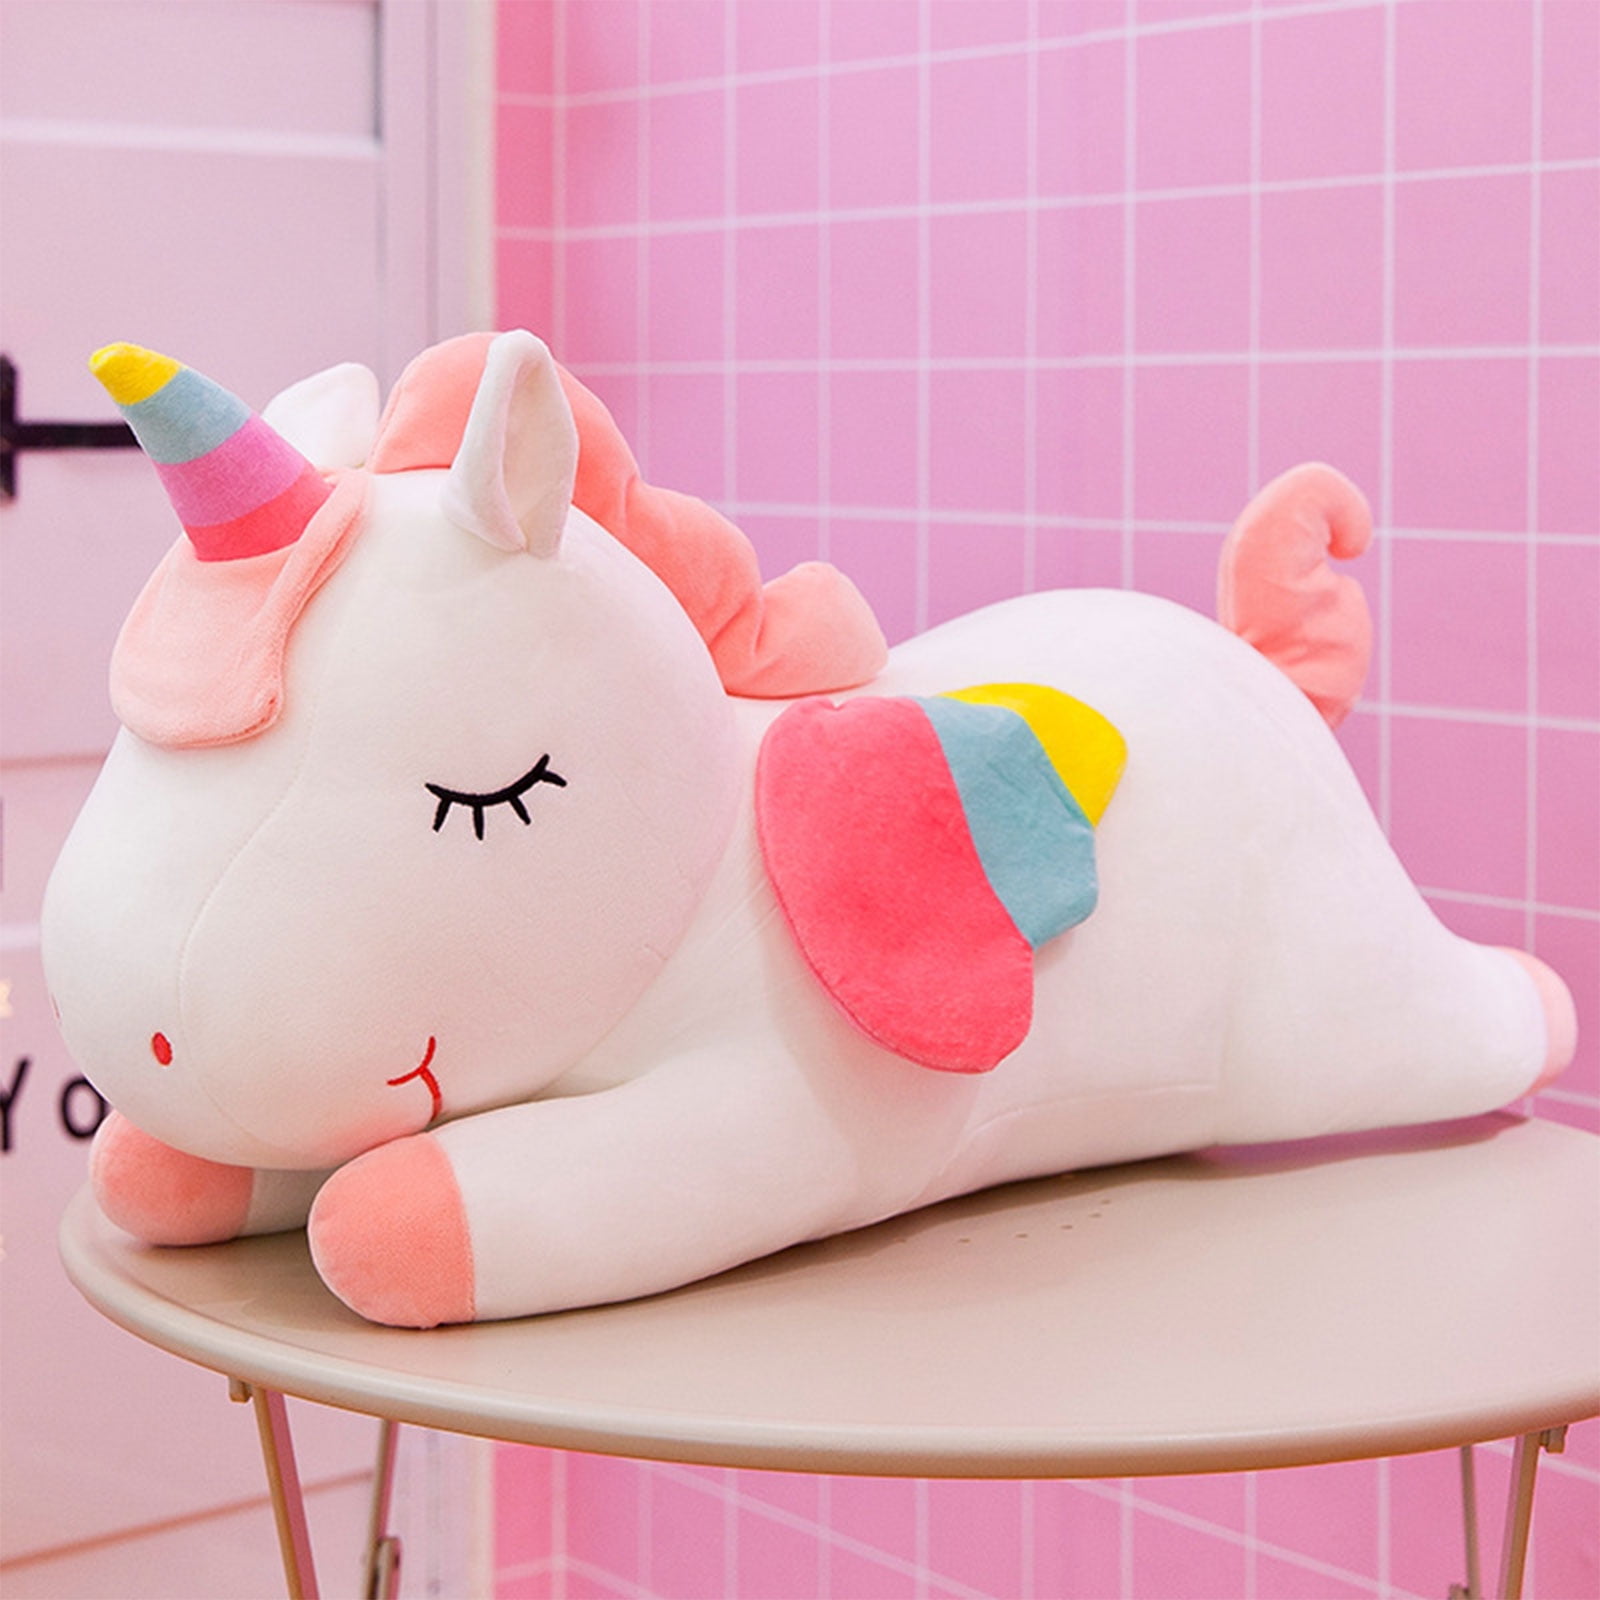 34inch Large Unicorn Plush Soft Doll Stuffed Animal Horse Toy Gift For Kids Girl 